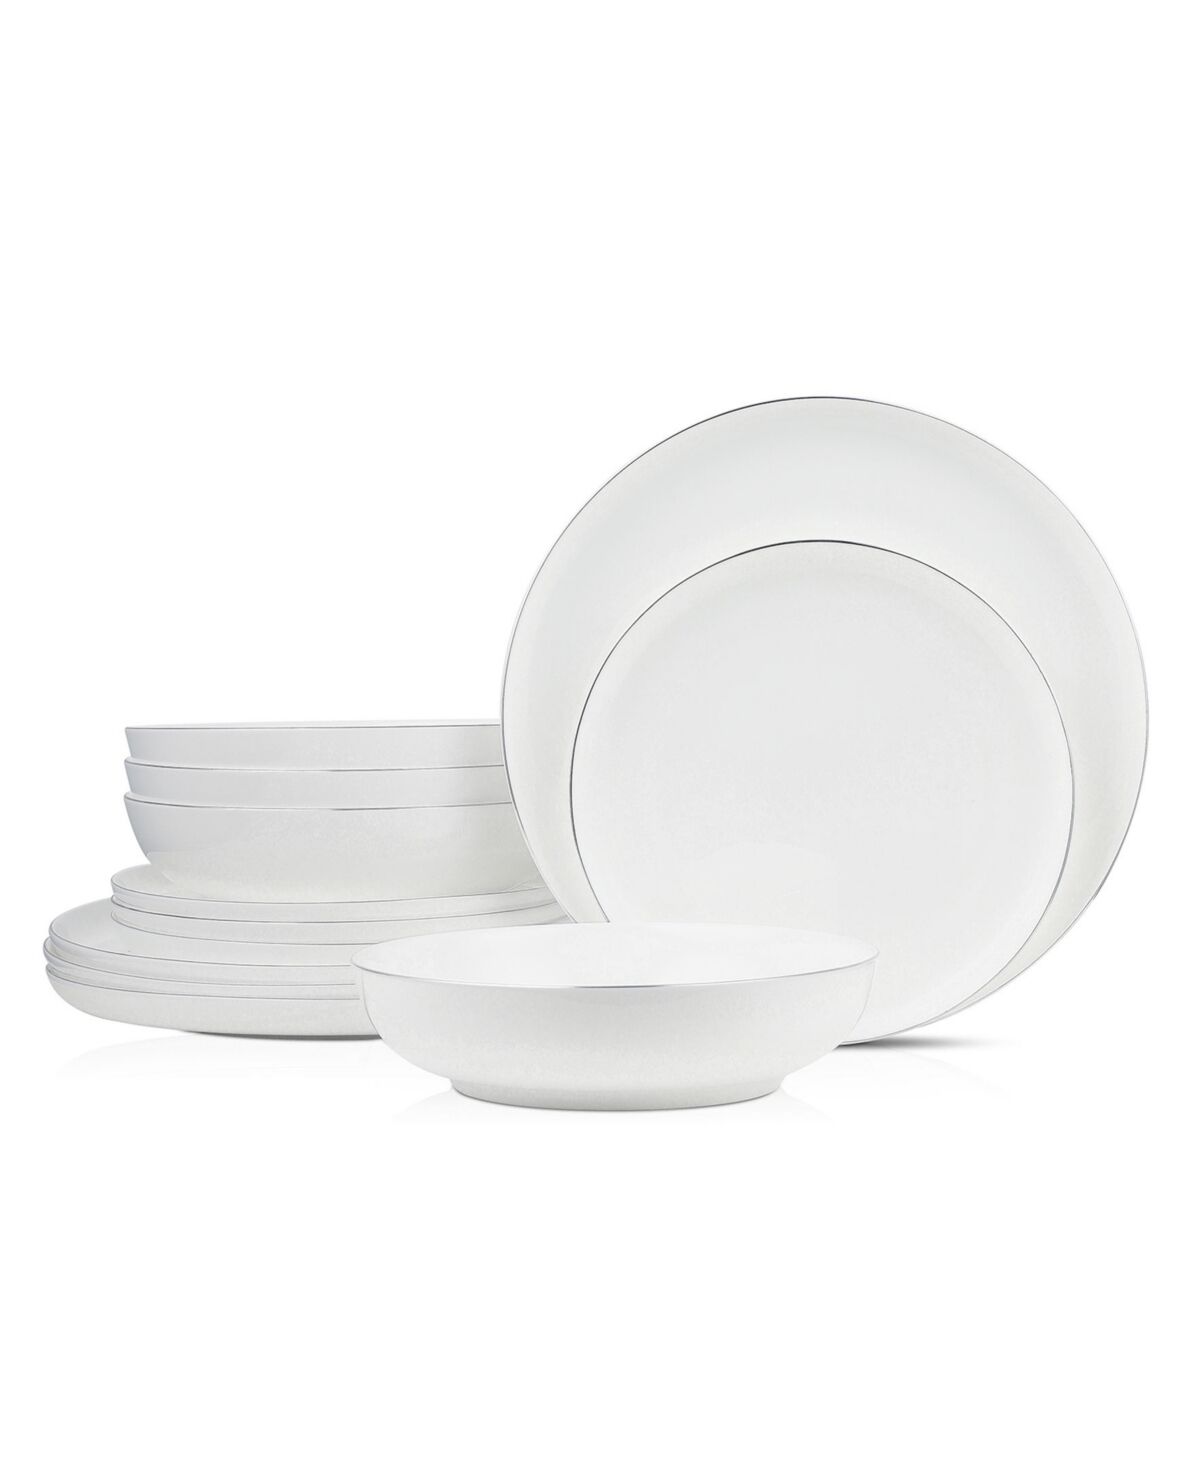 Stone Lain Gabrielle 24 Piece Dinnerware Set, Service for 8 - White and Platinum